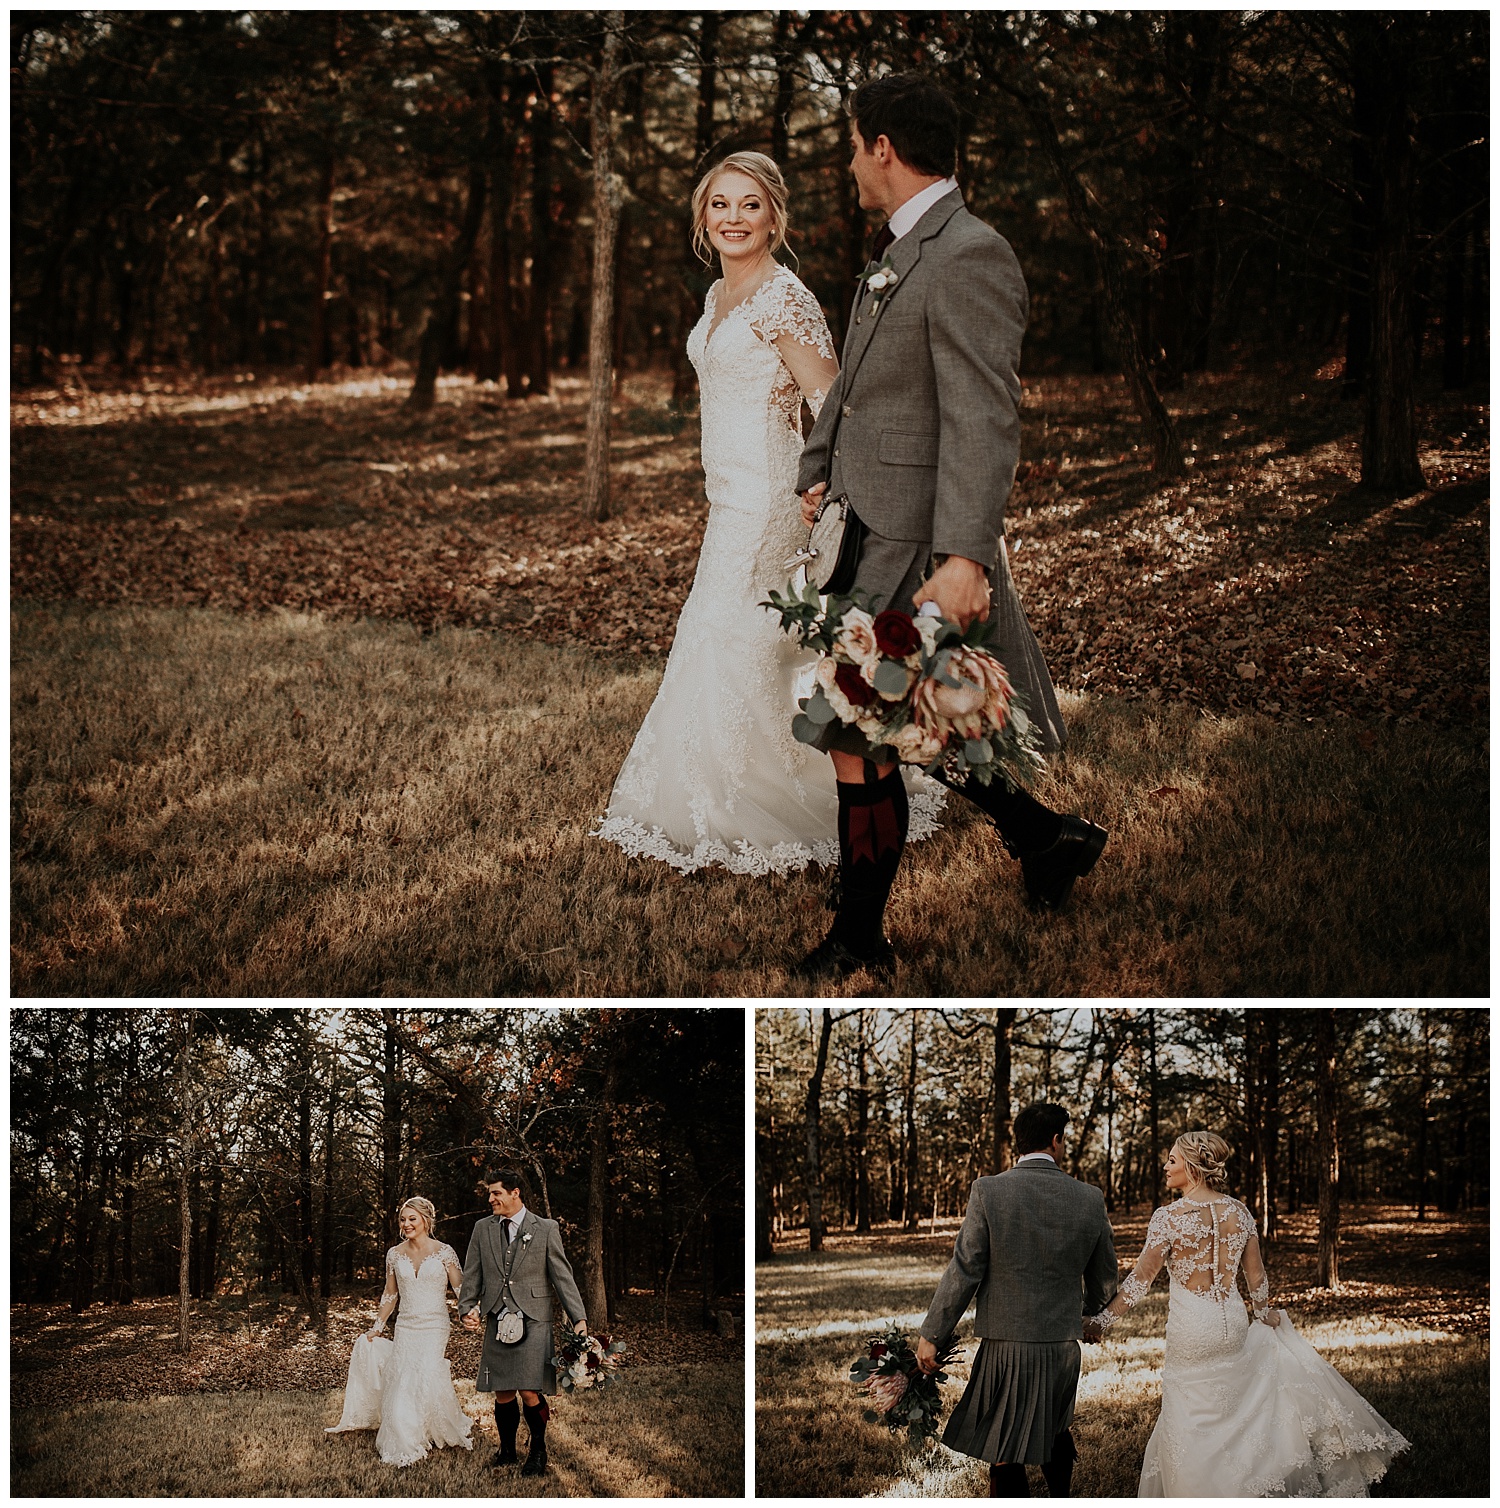 Laken-Mackenzie-Photography-Palm-Whispering-Oaks-Wedding-Venue-Dallas-Wedding-Photographer19.jpg